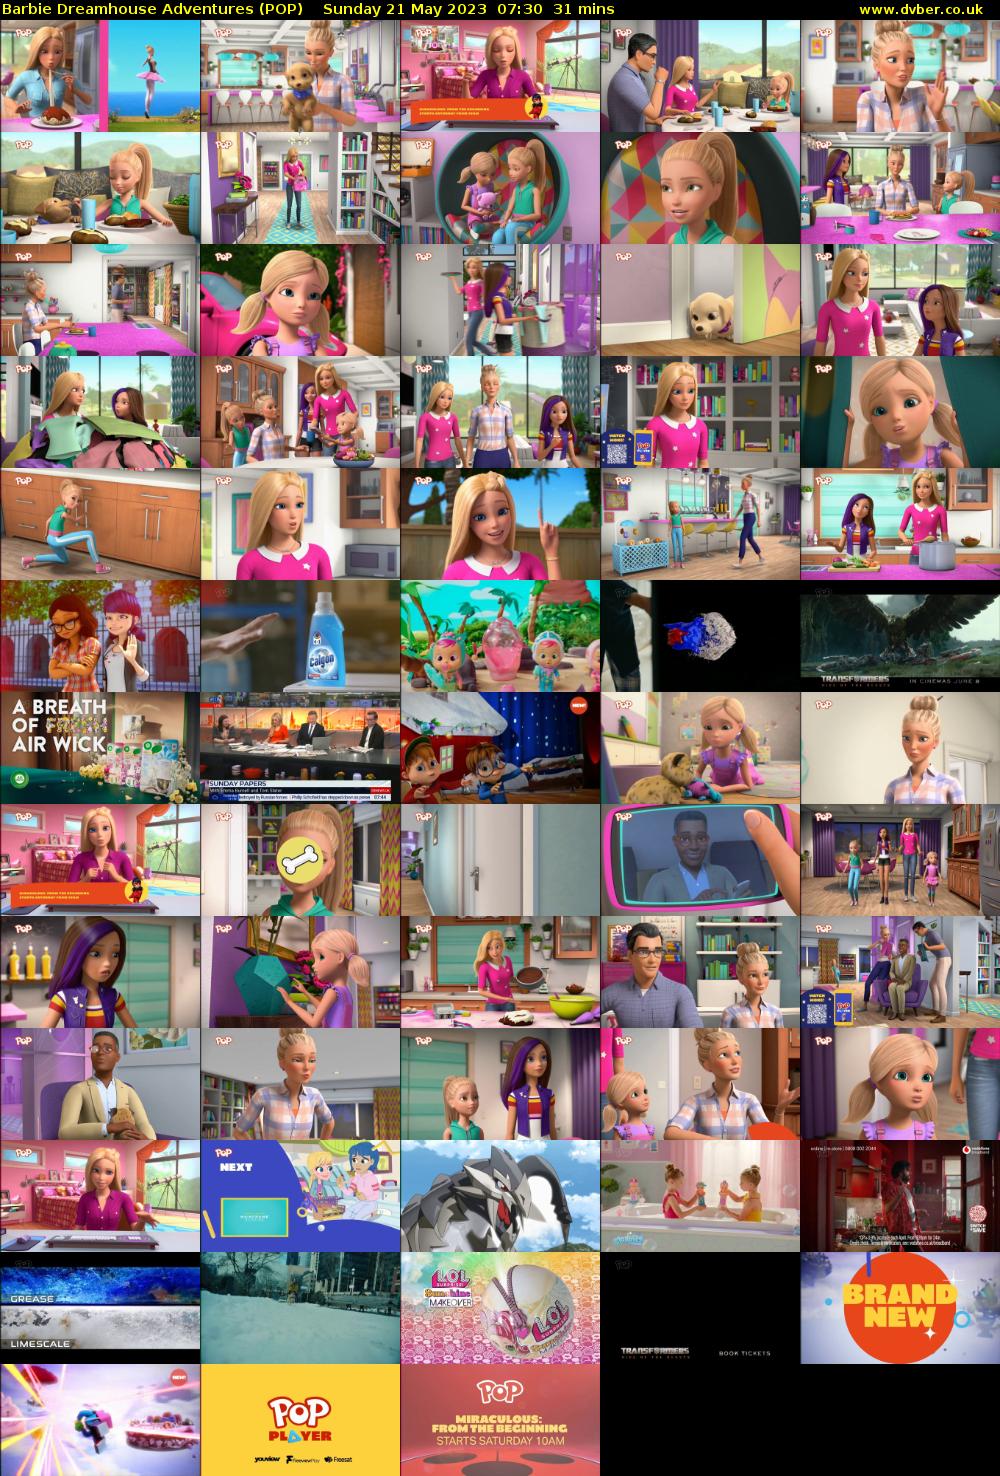 Barbie Dreamhouse Adventures (POP) Sunday 21 May 2023 07:30 - 08:01